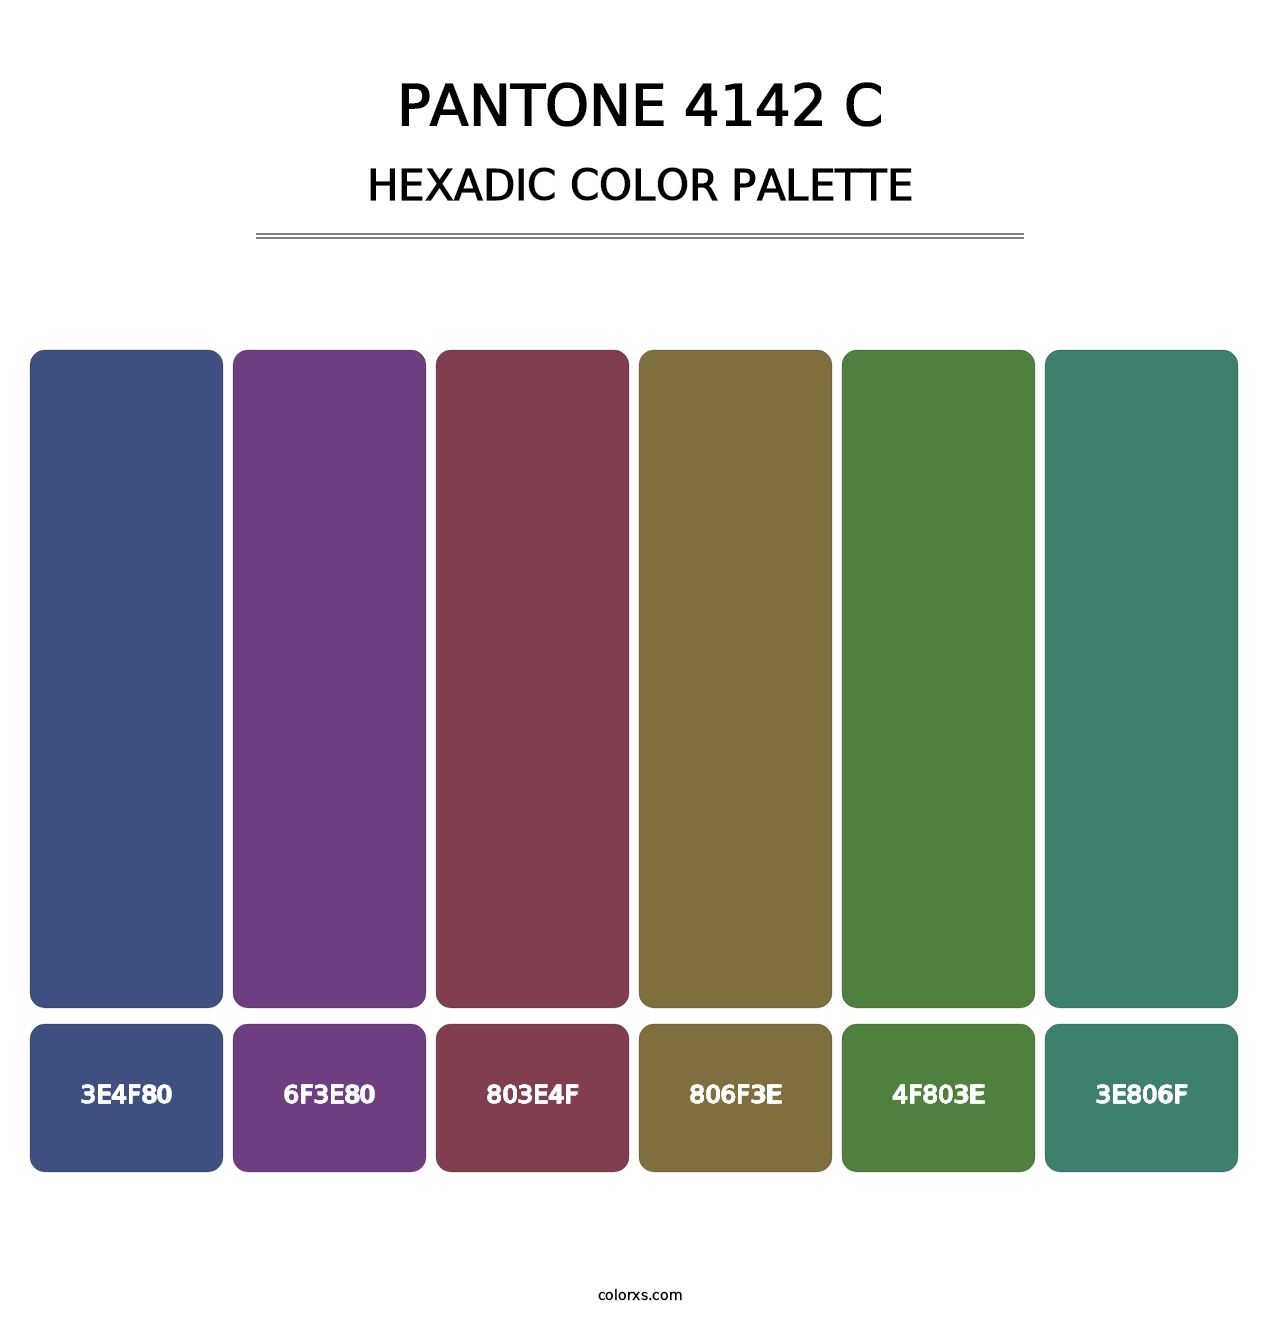 PANTONE 4142 C - Hexadic Color Palette